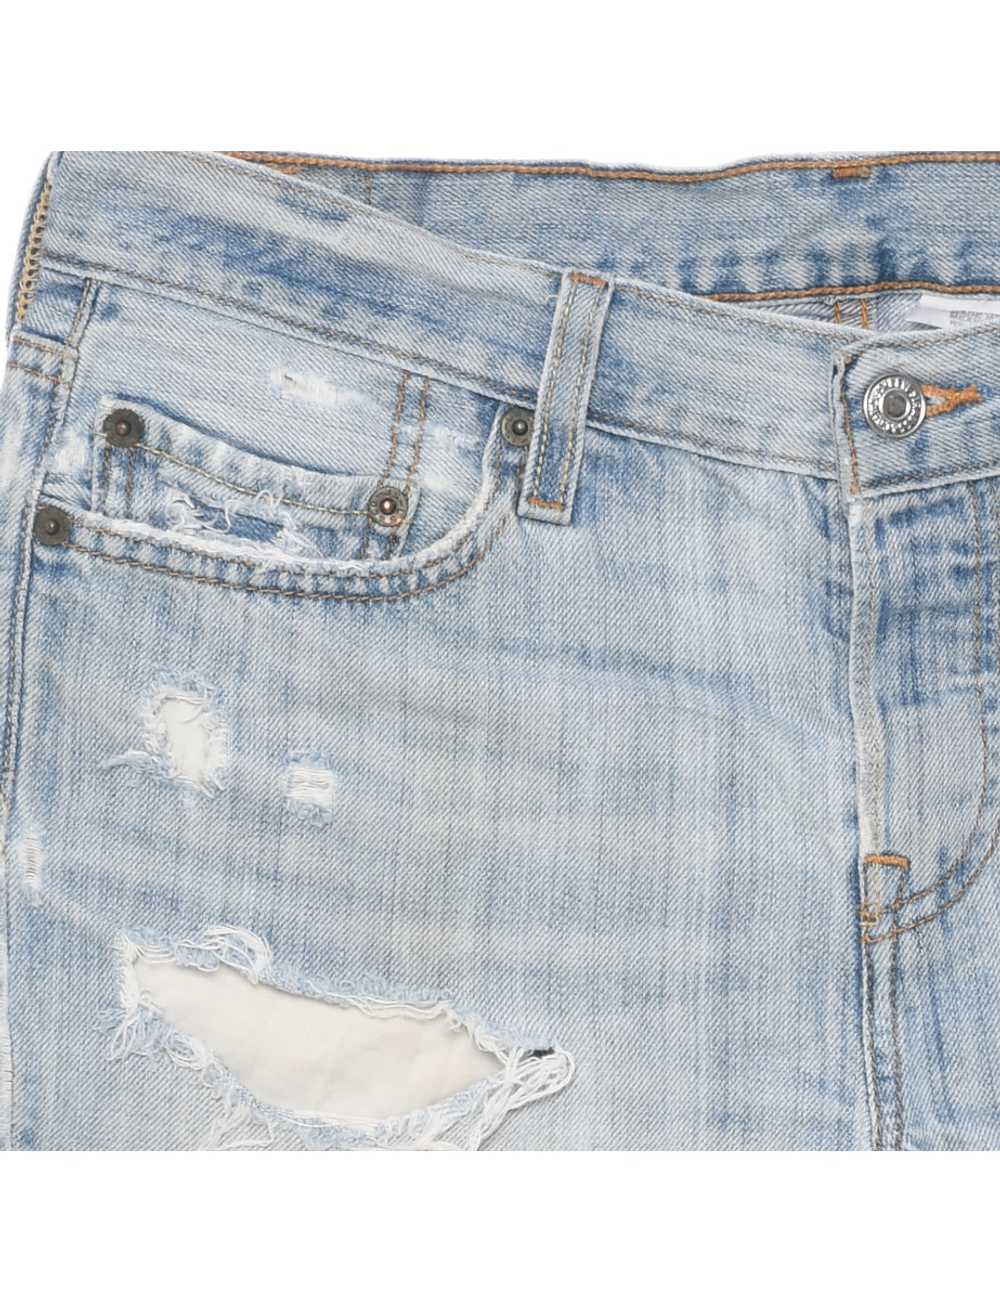 Levi's 501 Cut-off Denim Shorts - W31 L2 - image 3